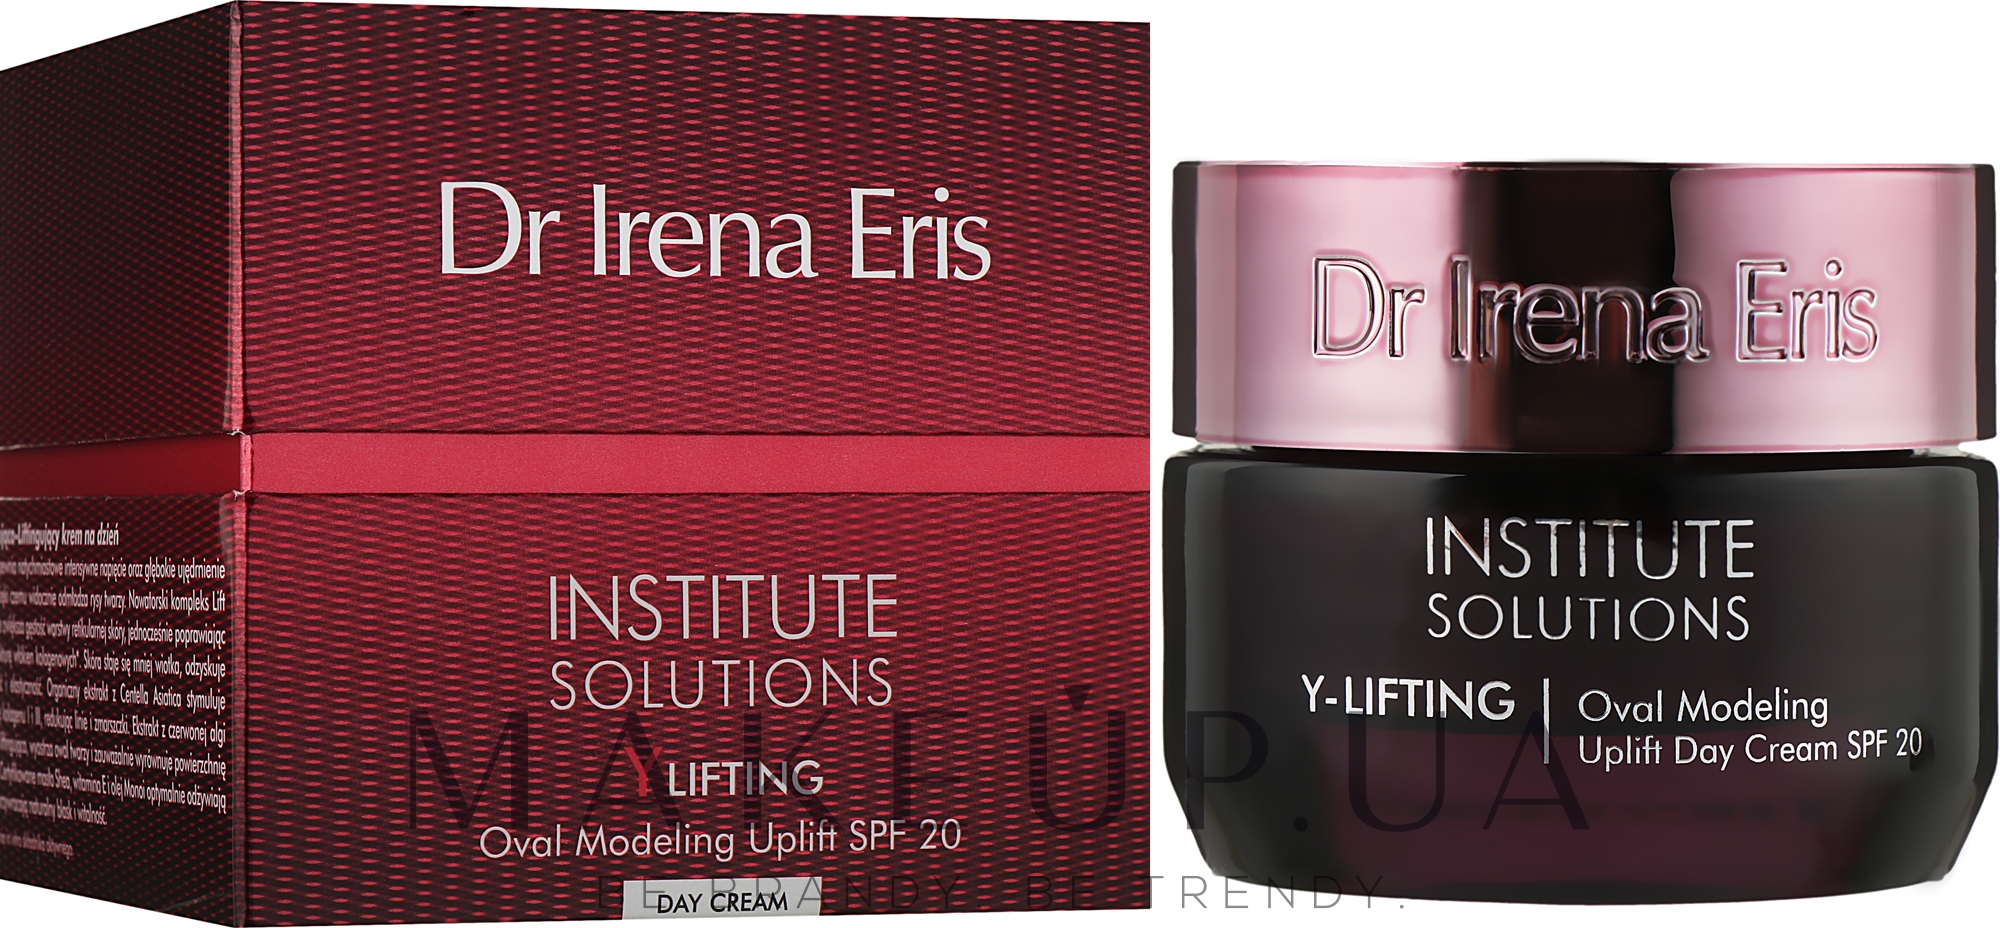 Дневной крем, моделирующий овал лица - Dr Irena Eris Y-Lifting Institute Solutions Oval Modeling Uplift Day Cream SPF 20 — фото 50ml